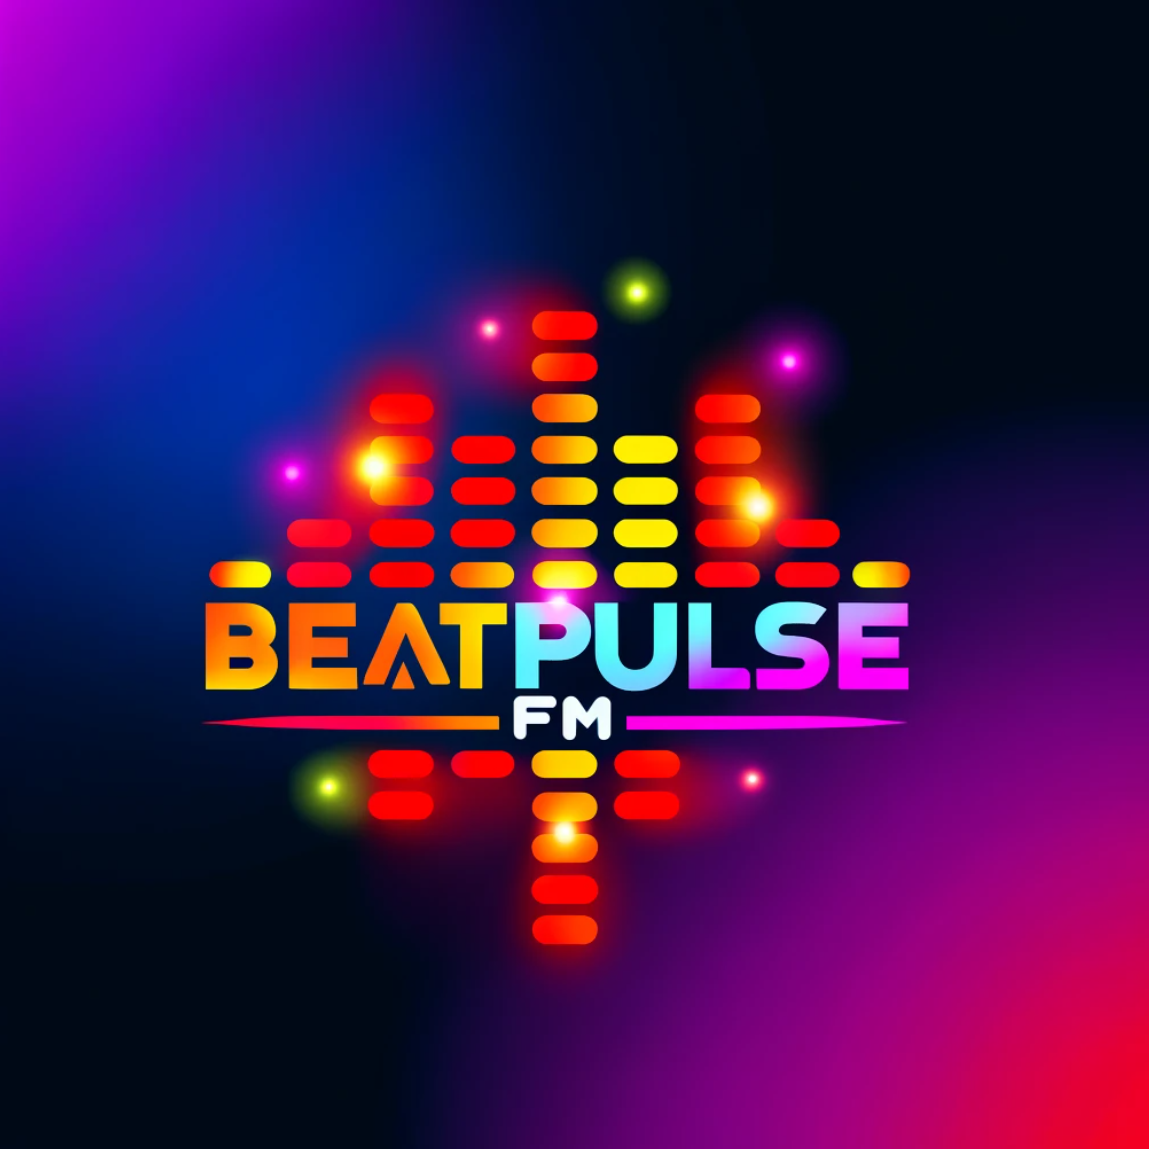 BeatPulse FM